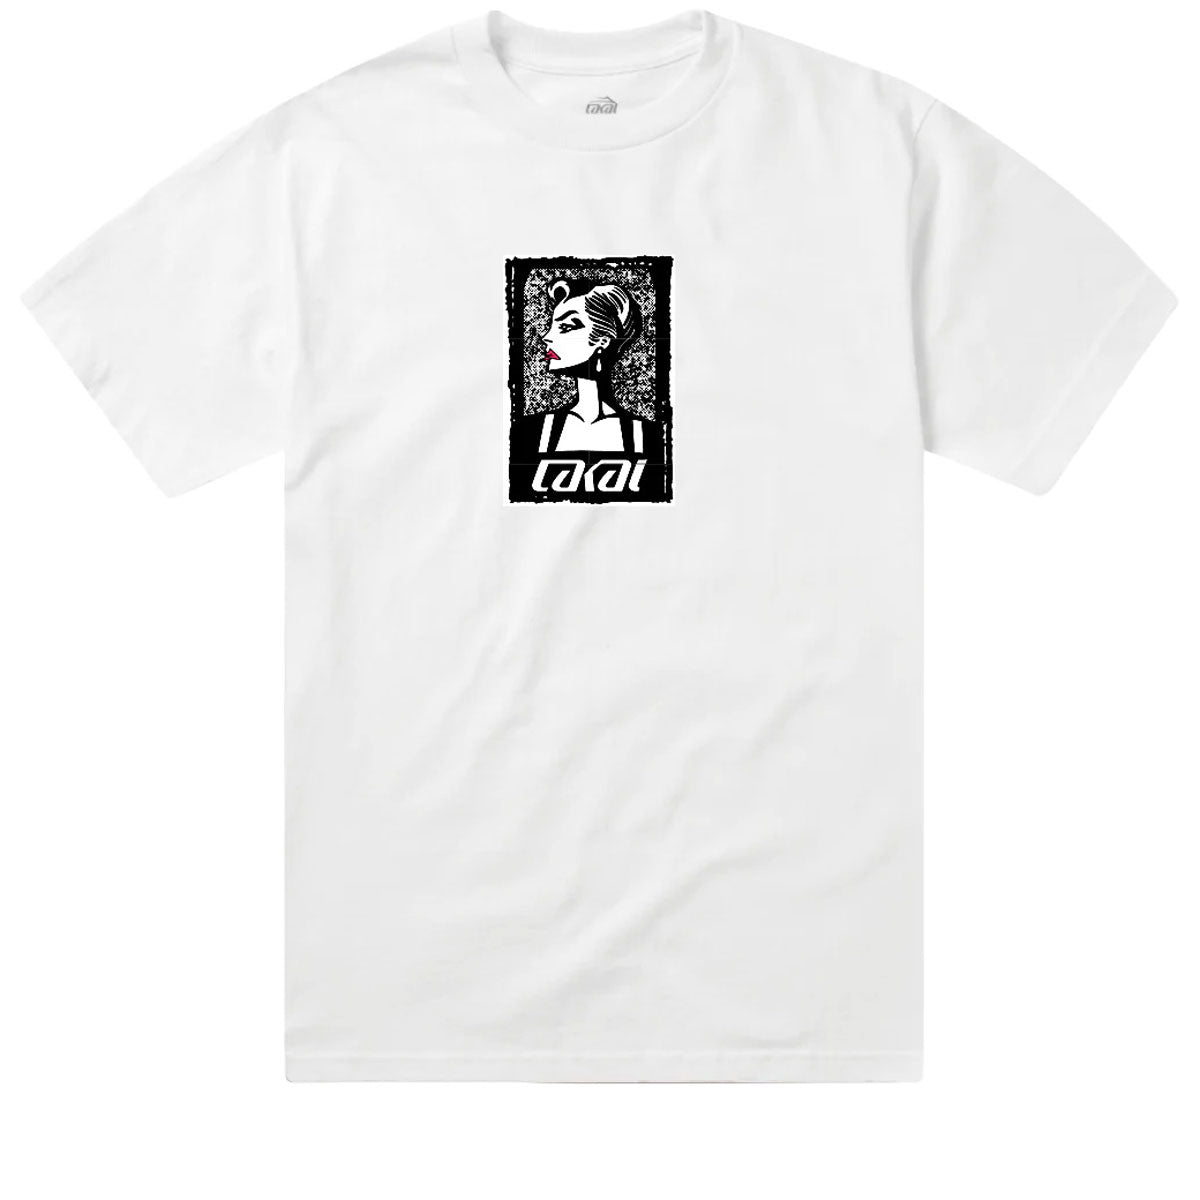 Lakai Nouveau T-Shirt - White image 1